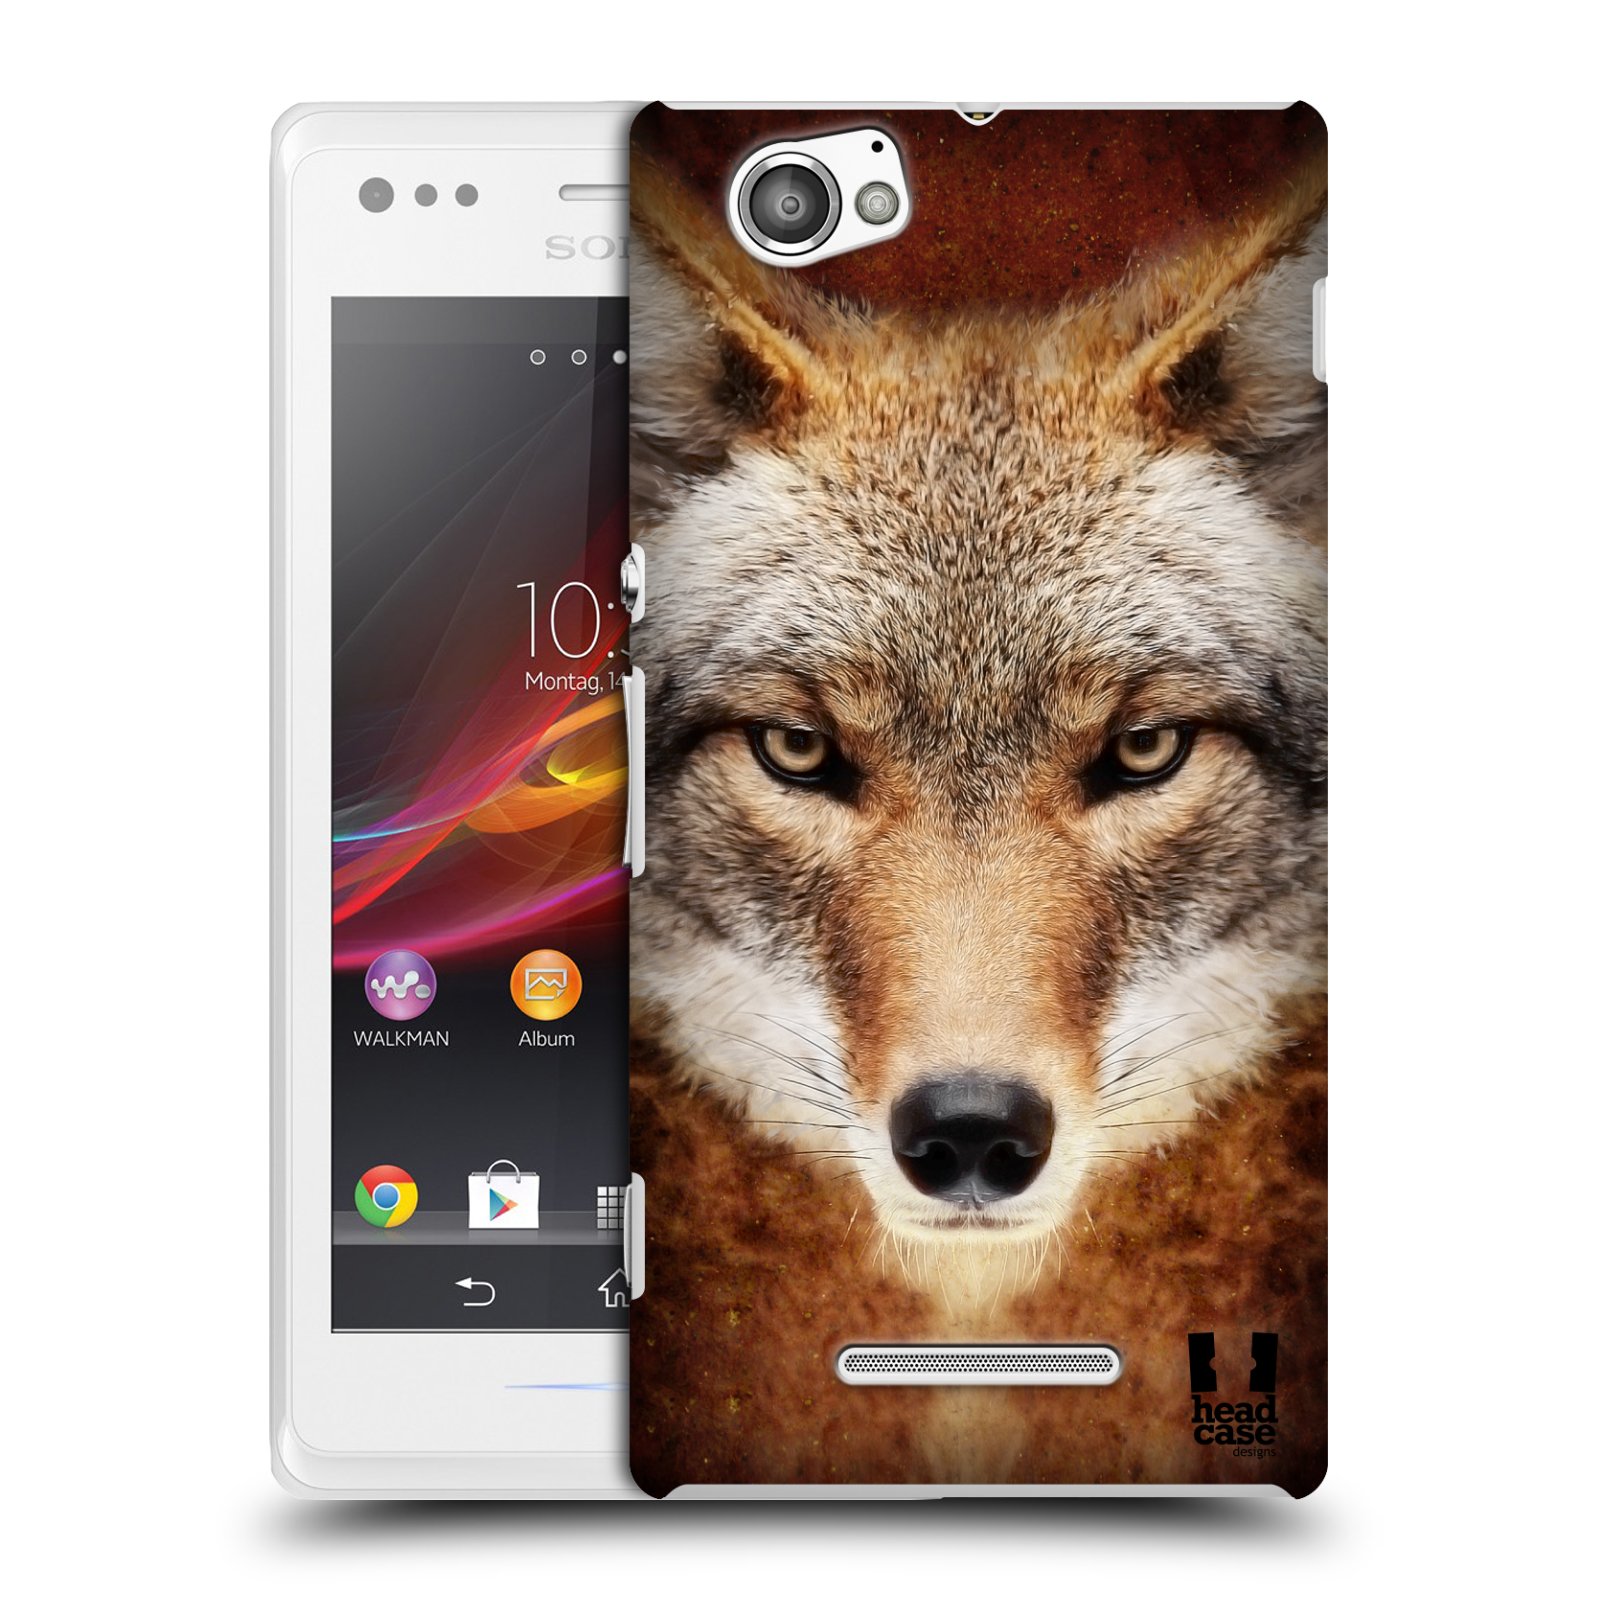 HEAD CASE plastový obal na mobil Sony Xperia M vzor Zvířecí tváře kojot